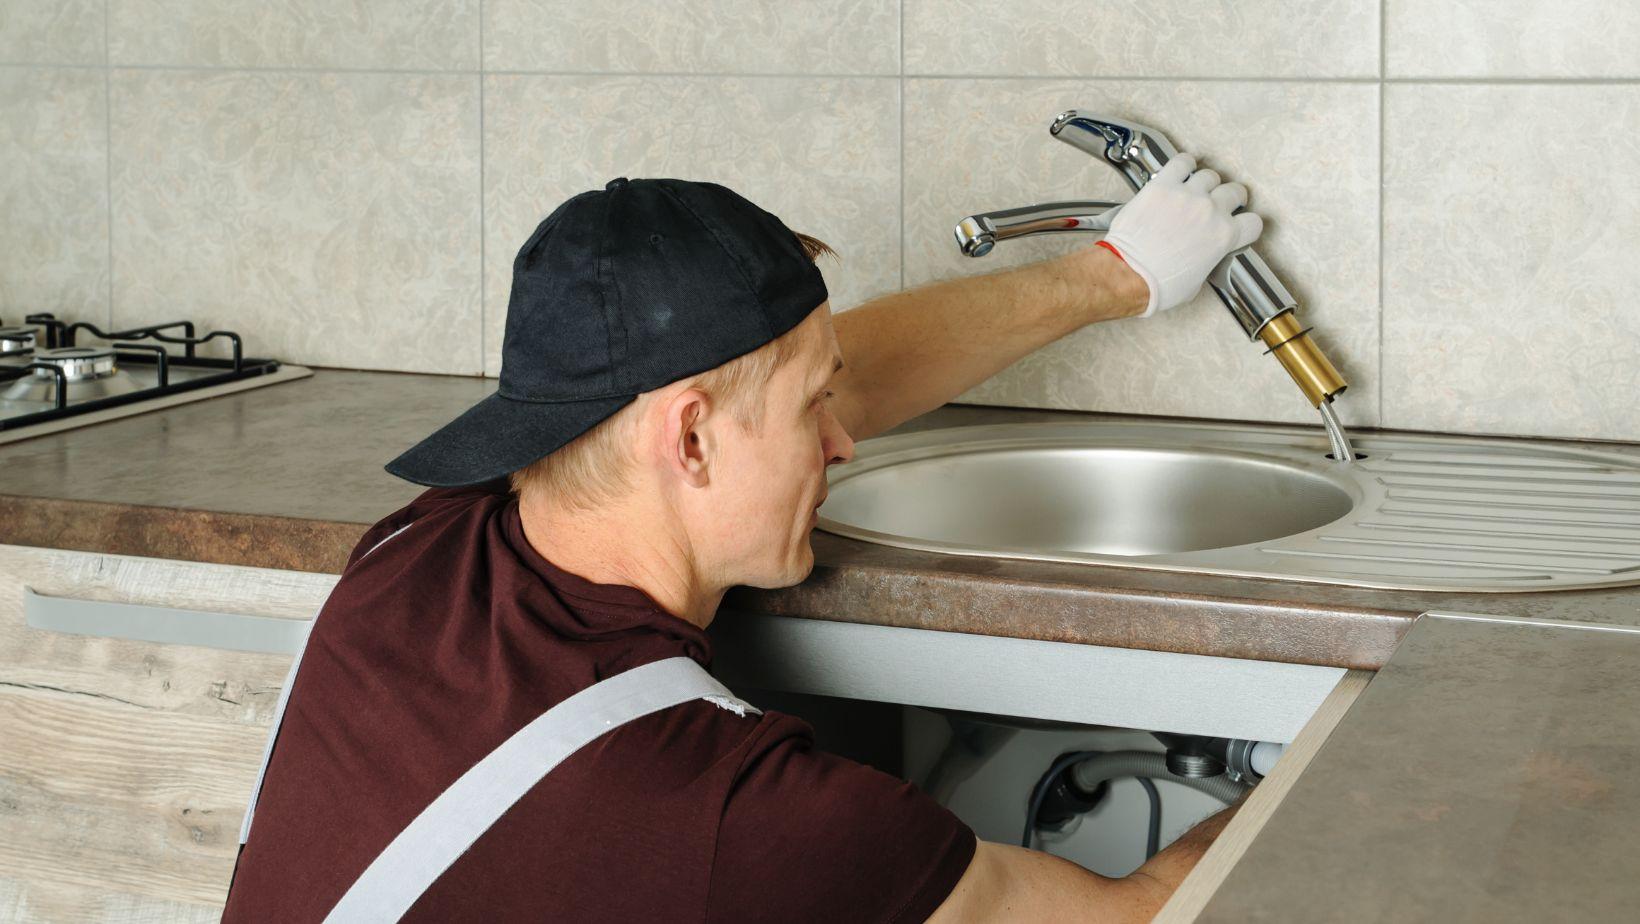 Choisir l installation robinet service plombier vdk